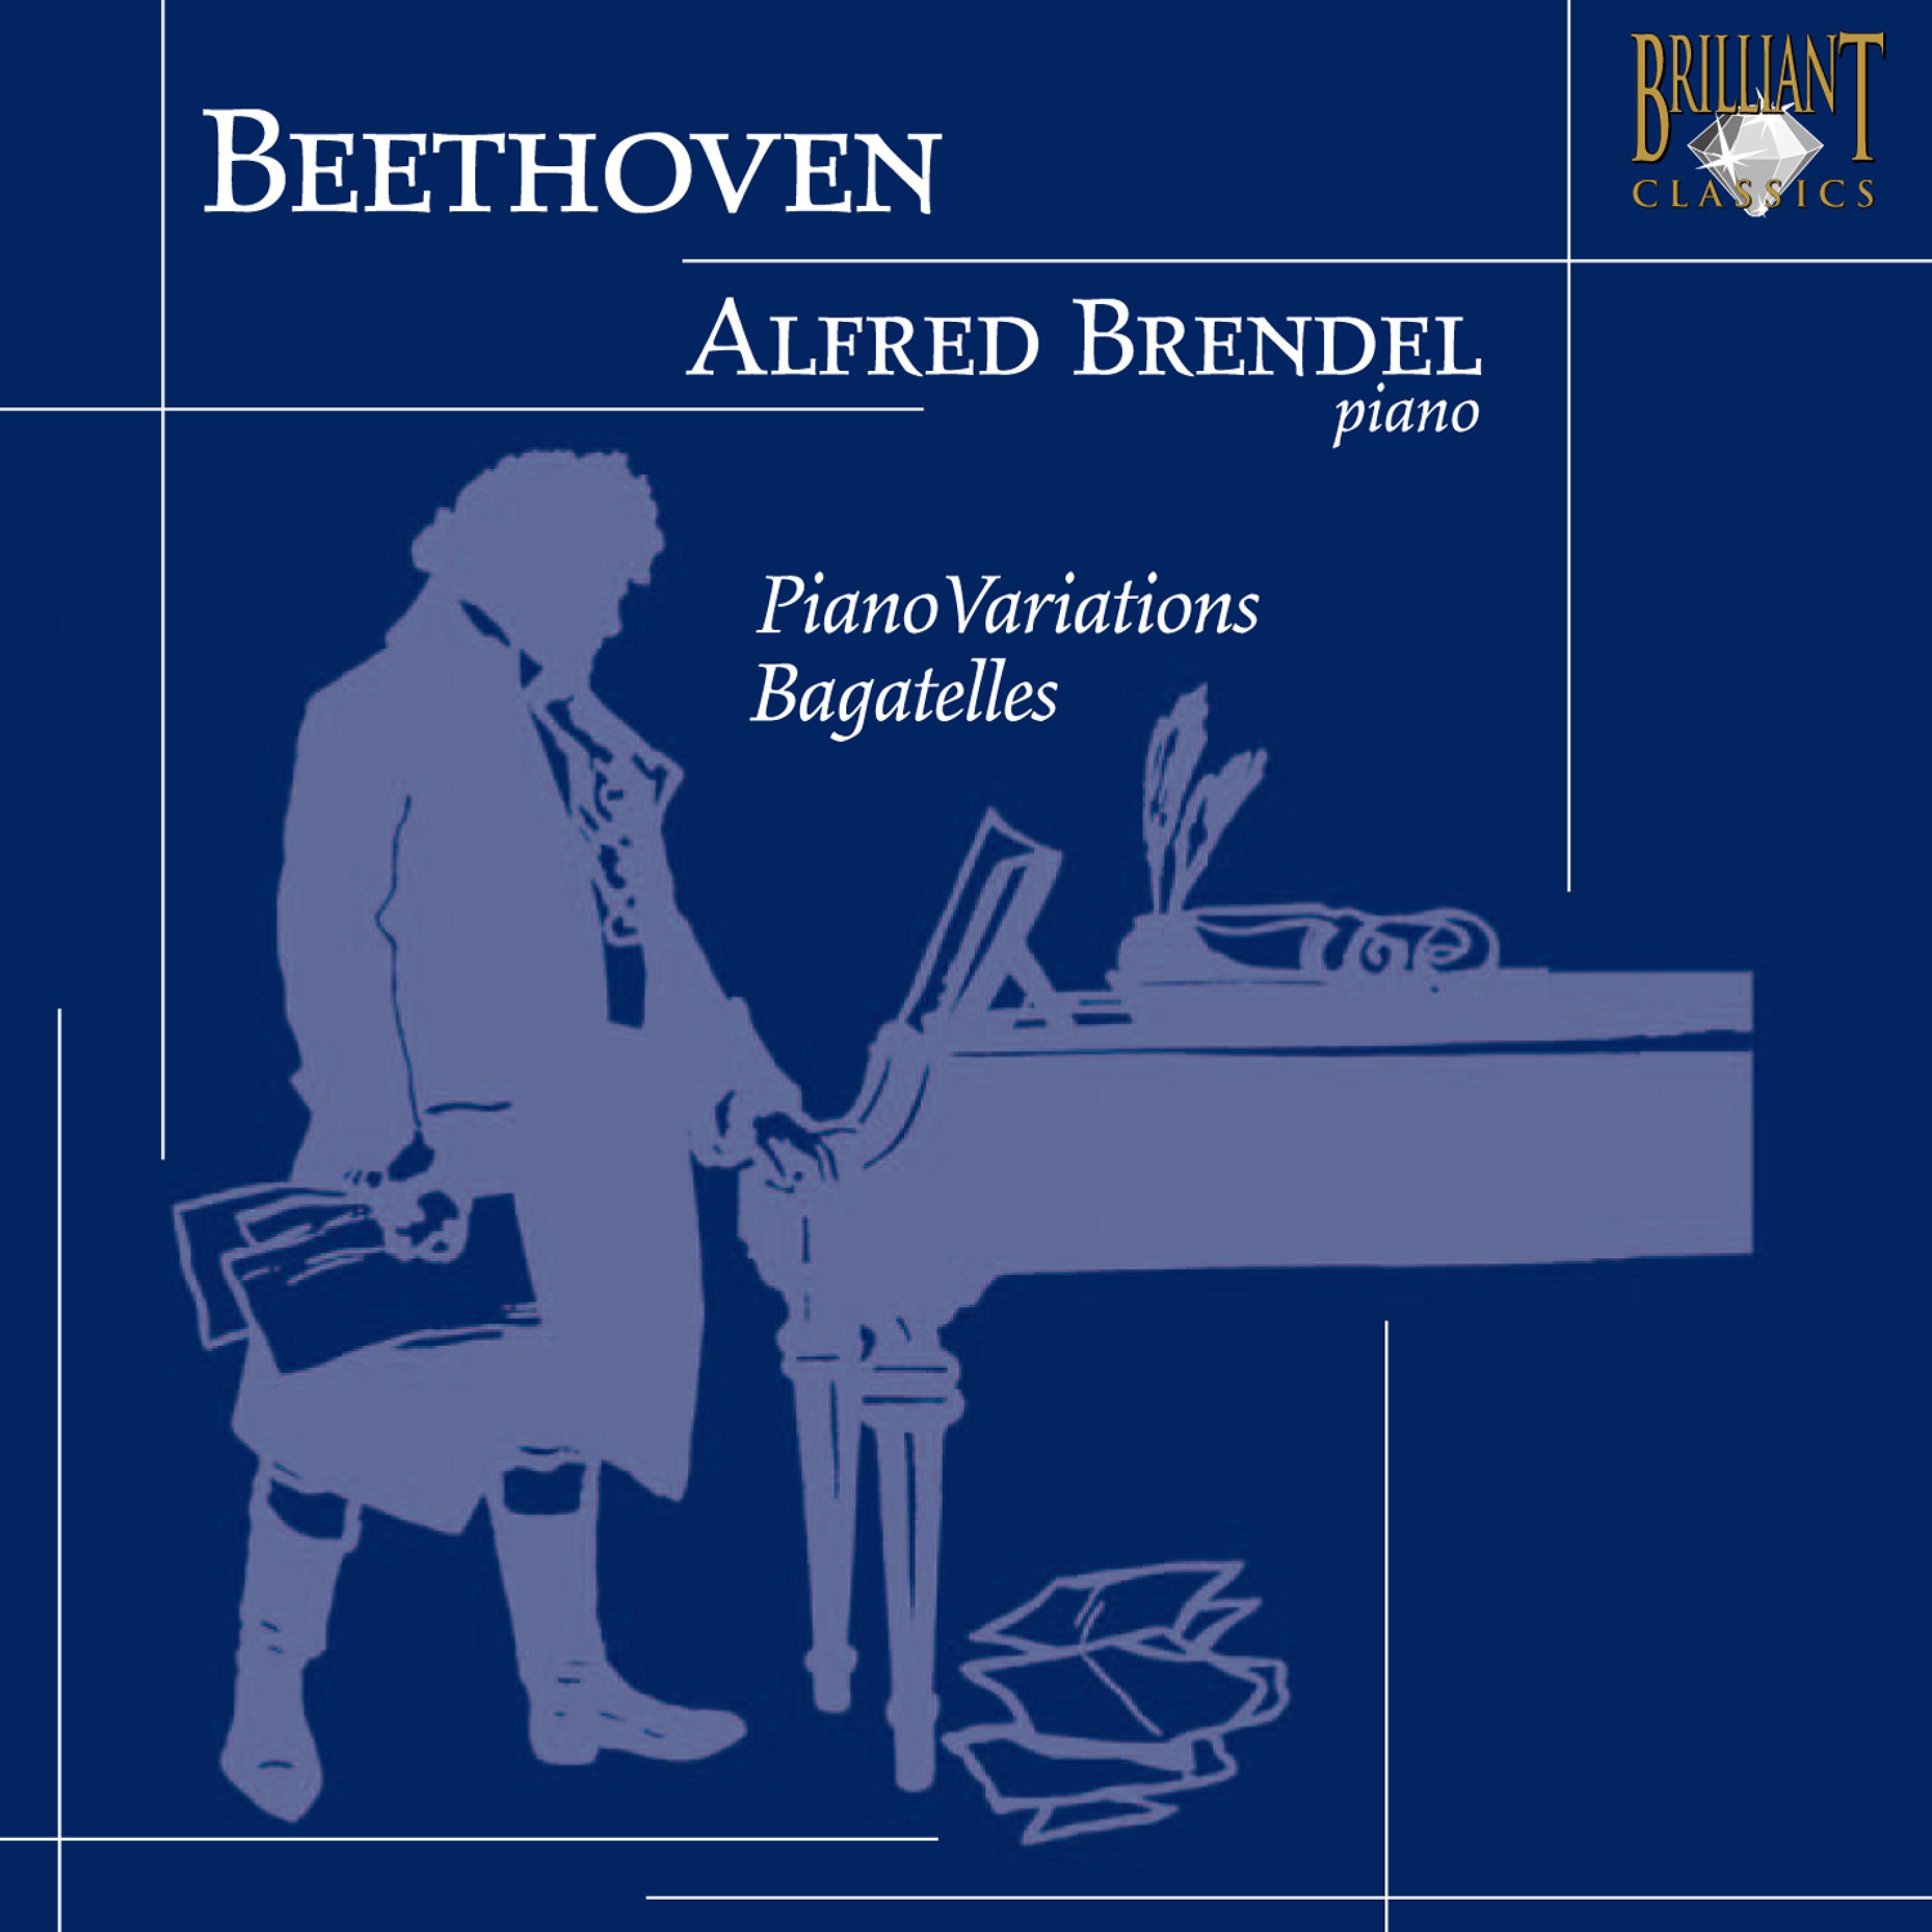 Beethoven: Piano Variations, Bagatelles